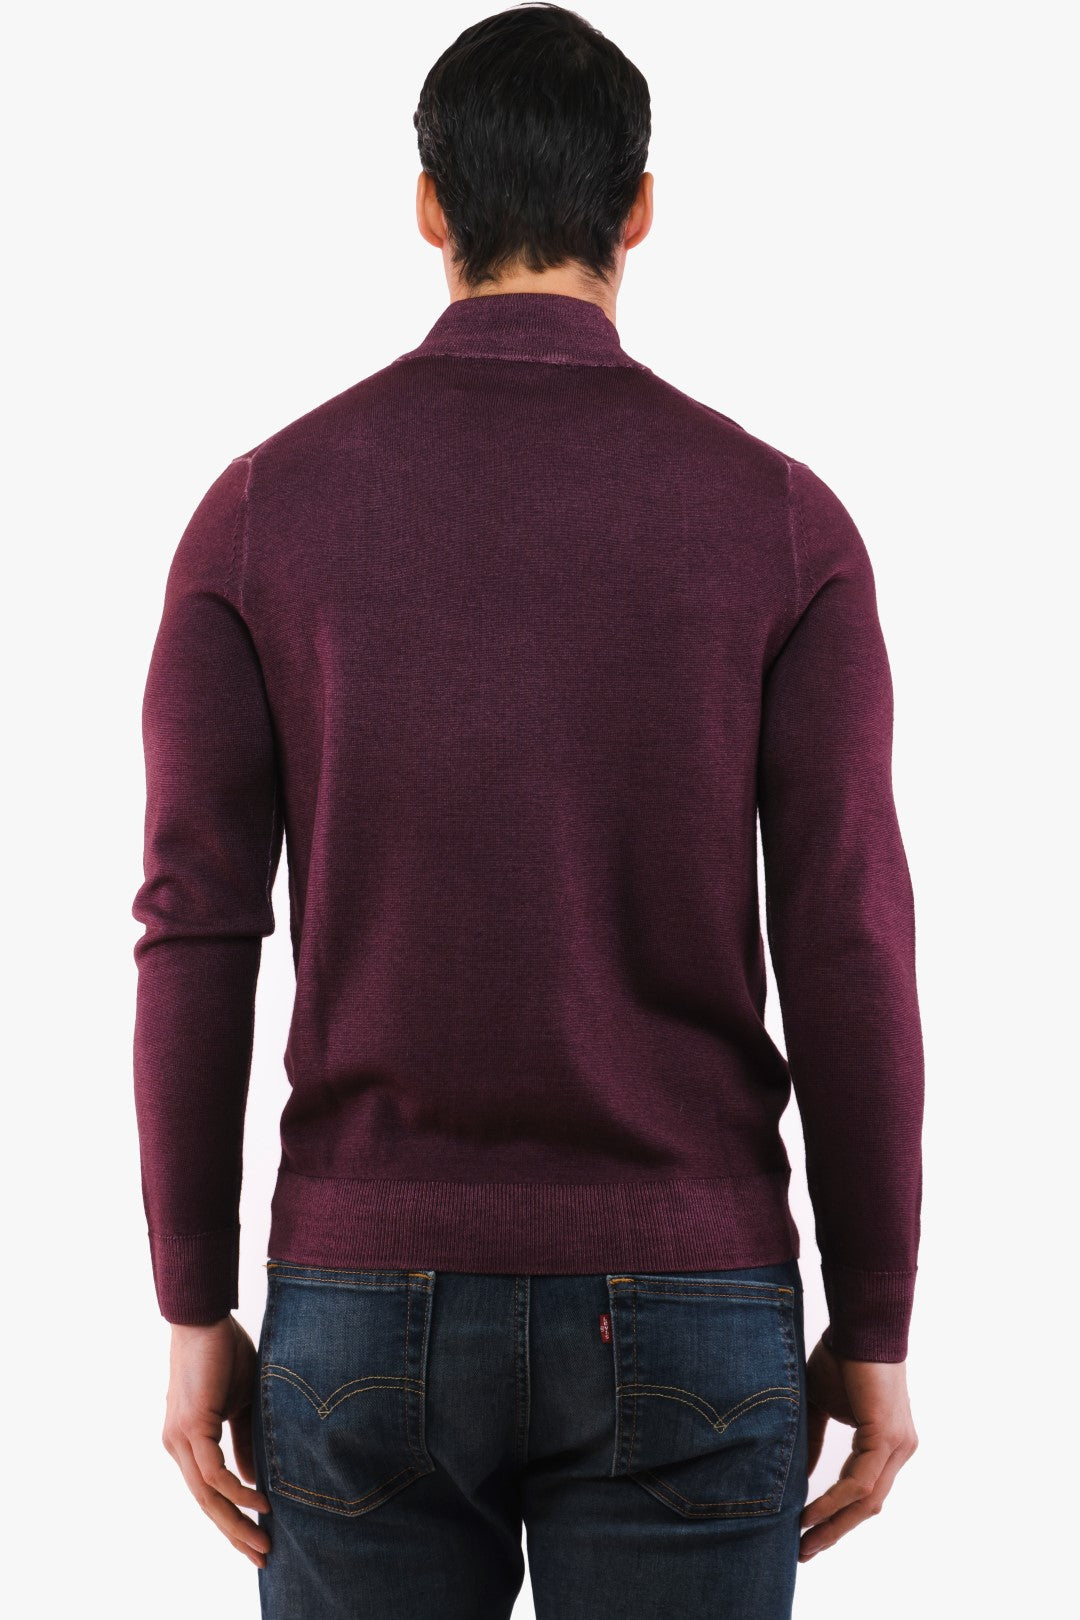 Michael Kors sweater in Merlot color